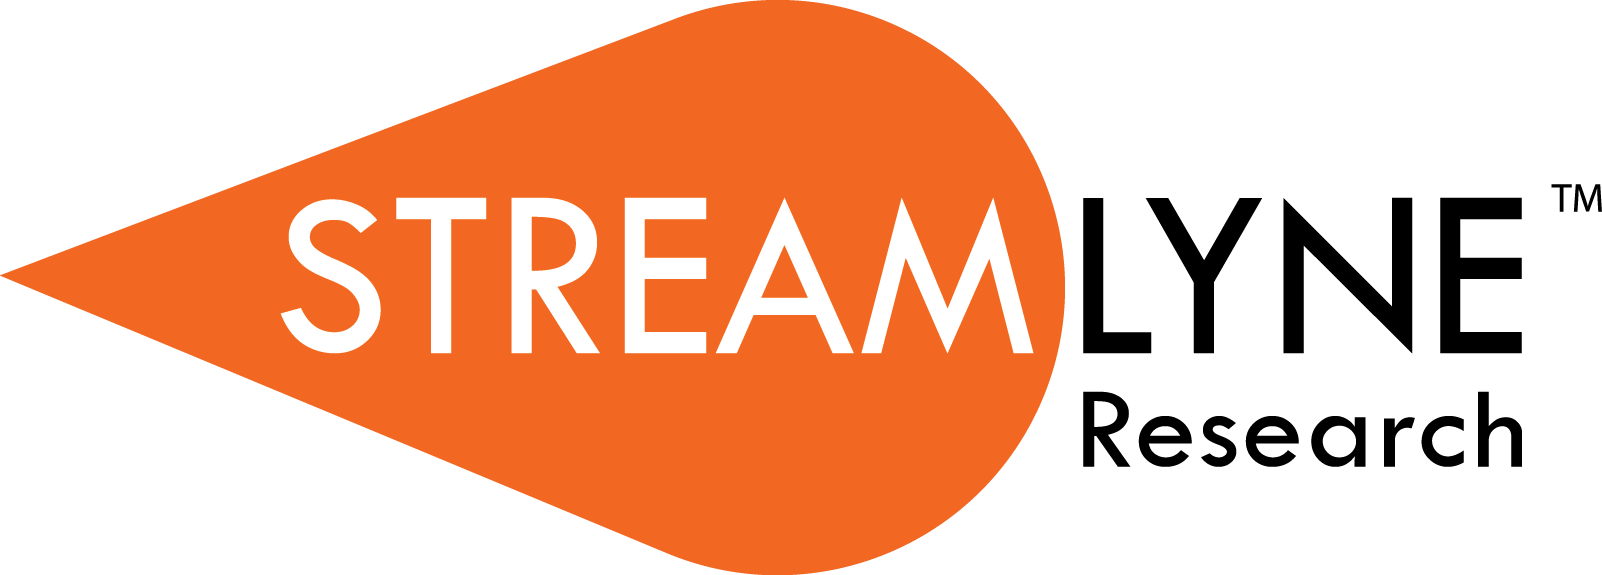 Streamlyne logo